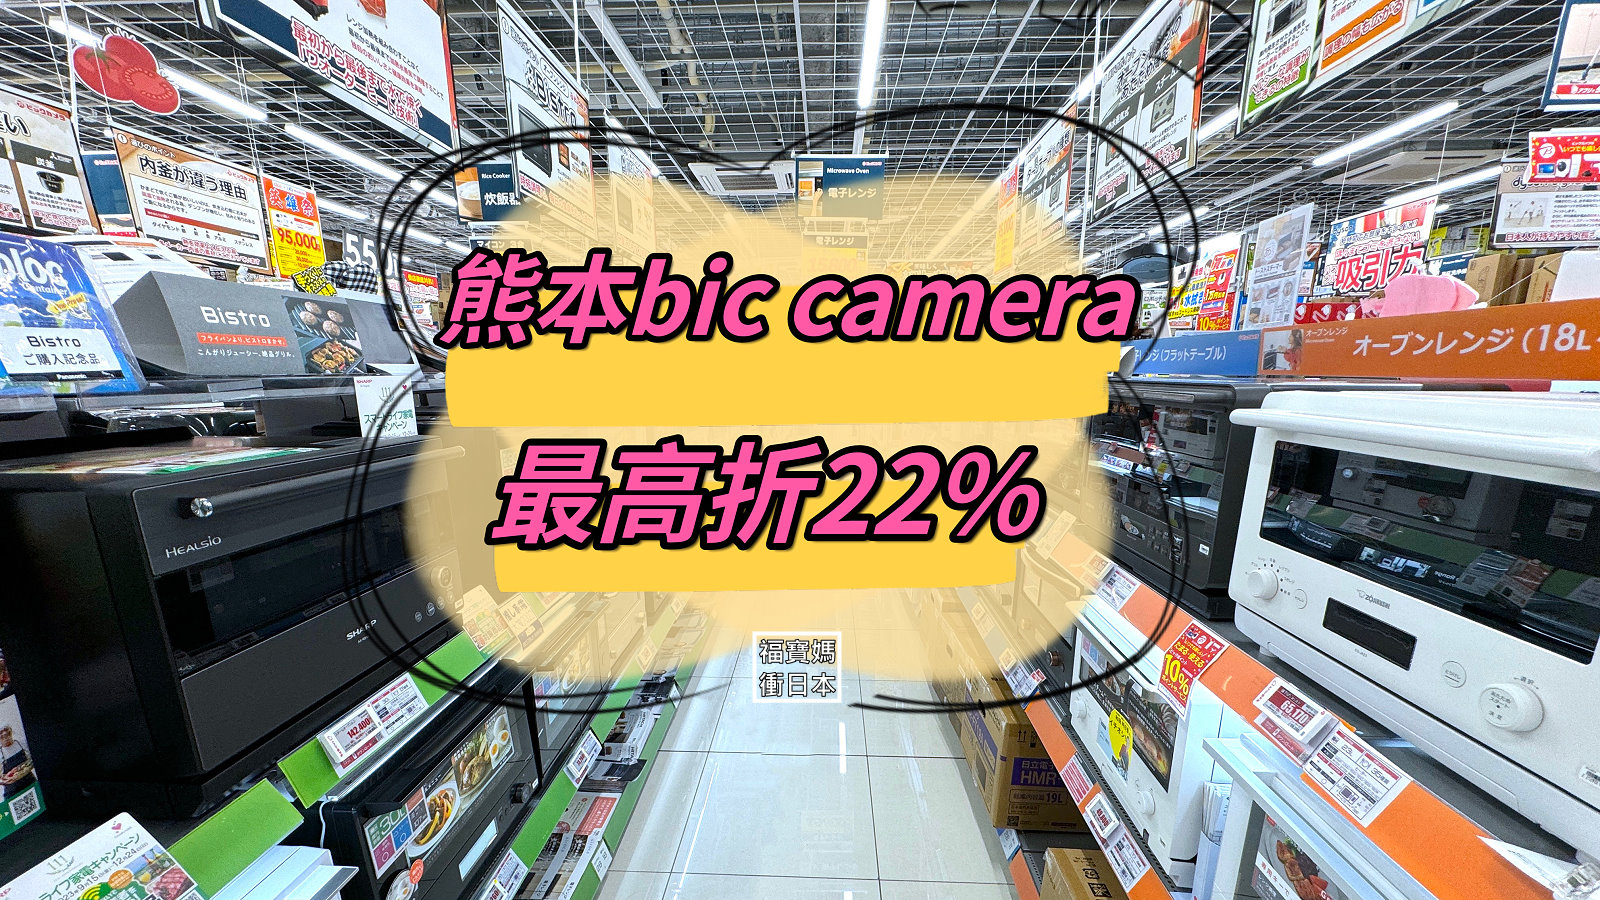 熊本bic camera